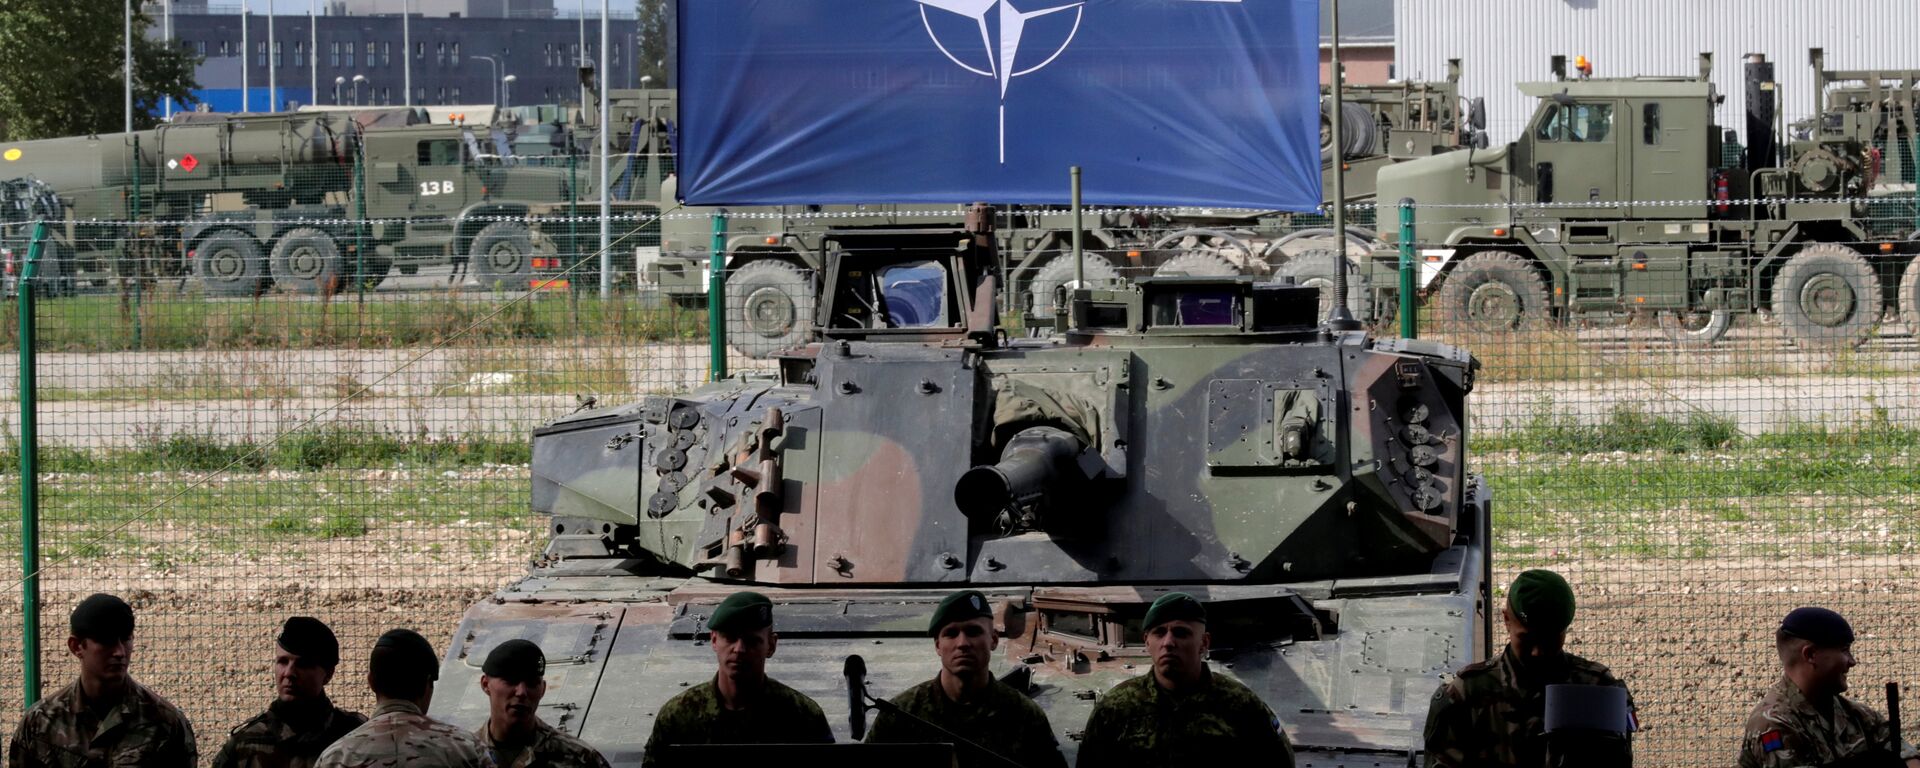 NATO eFP battle group soldiers wait for NATO Secretary General Jens Stoltenberg visit in Tapa military base, Estonia September 6, 2017 - Sputnik International, 1920, 30.11.2021